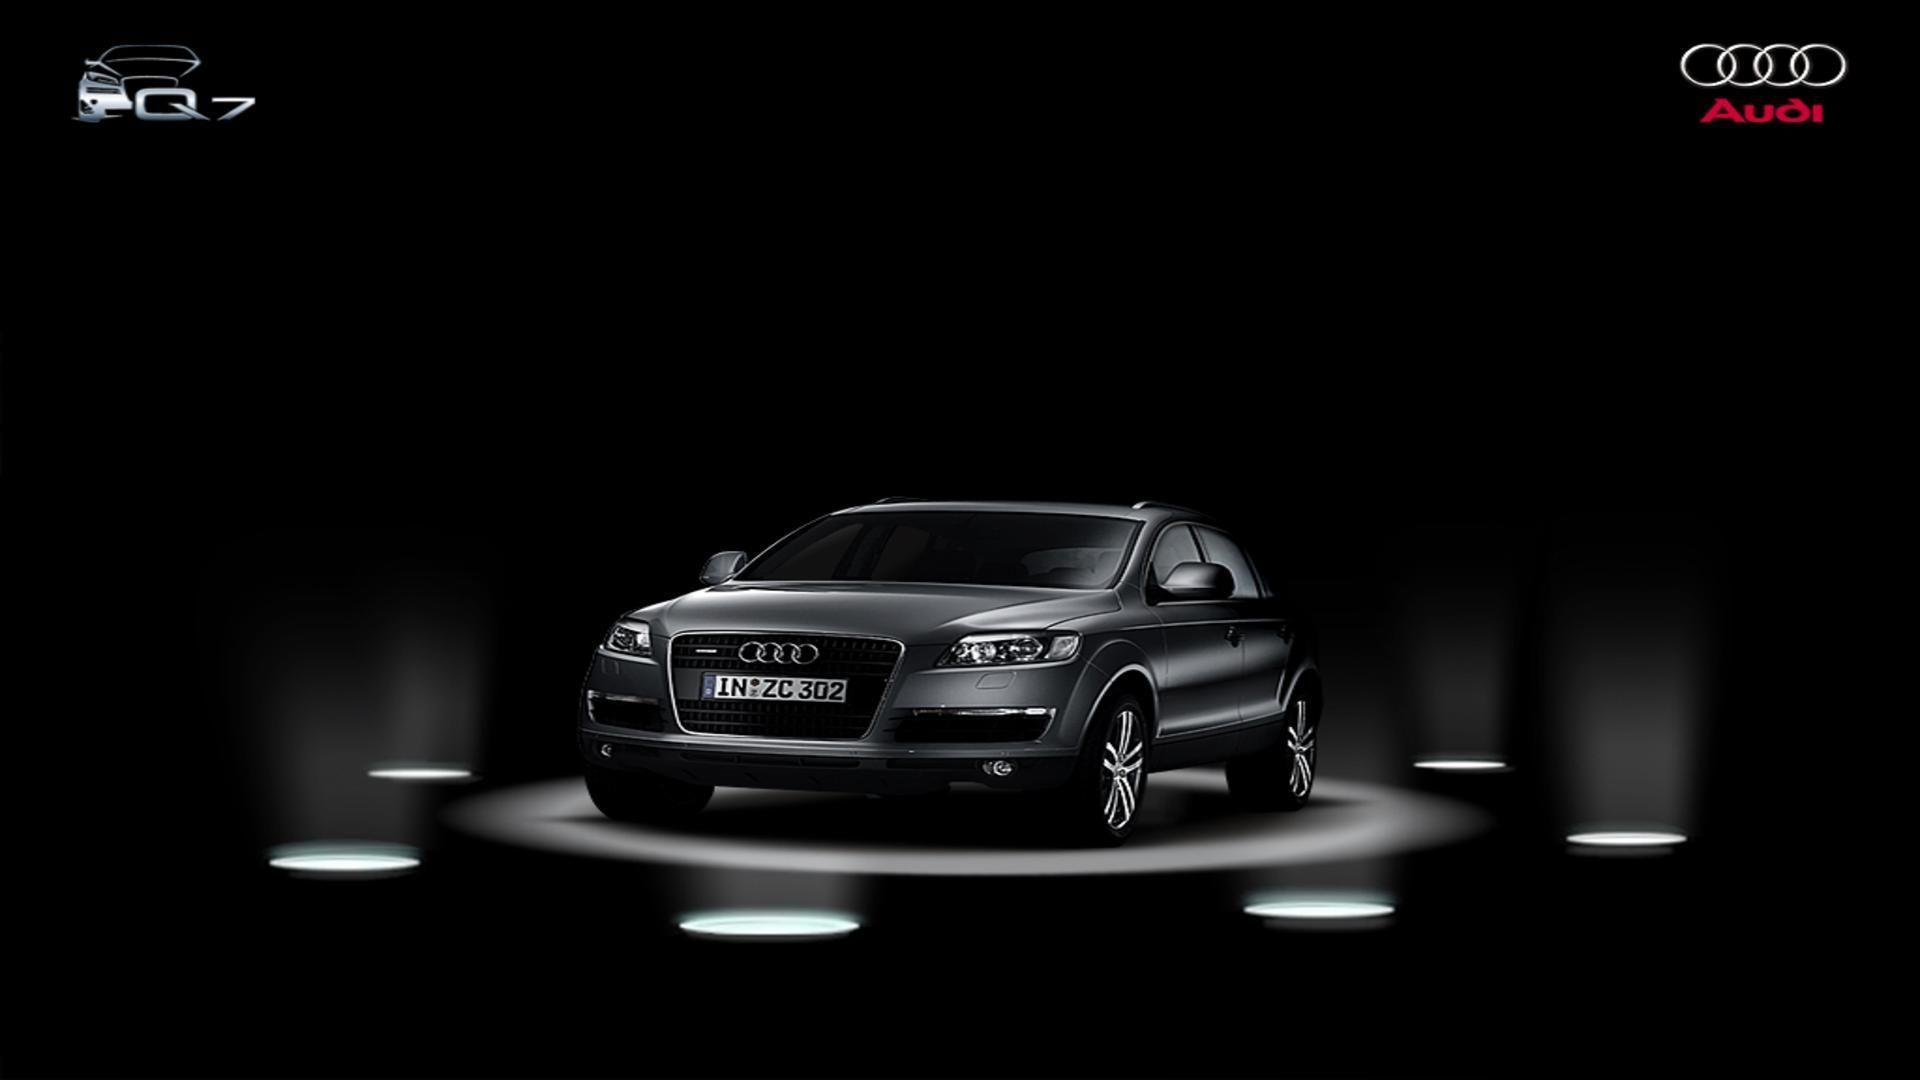 Audi cars black edition free desktop background wallpaper image